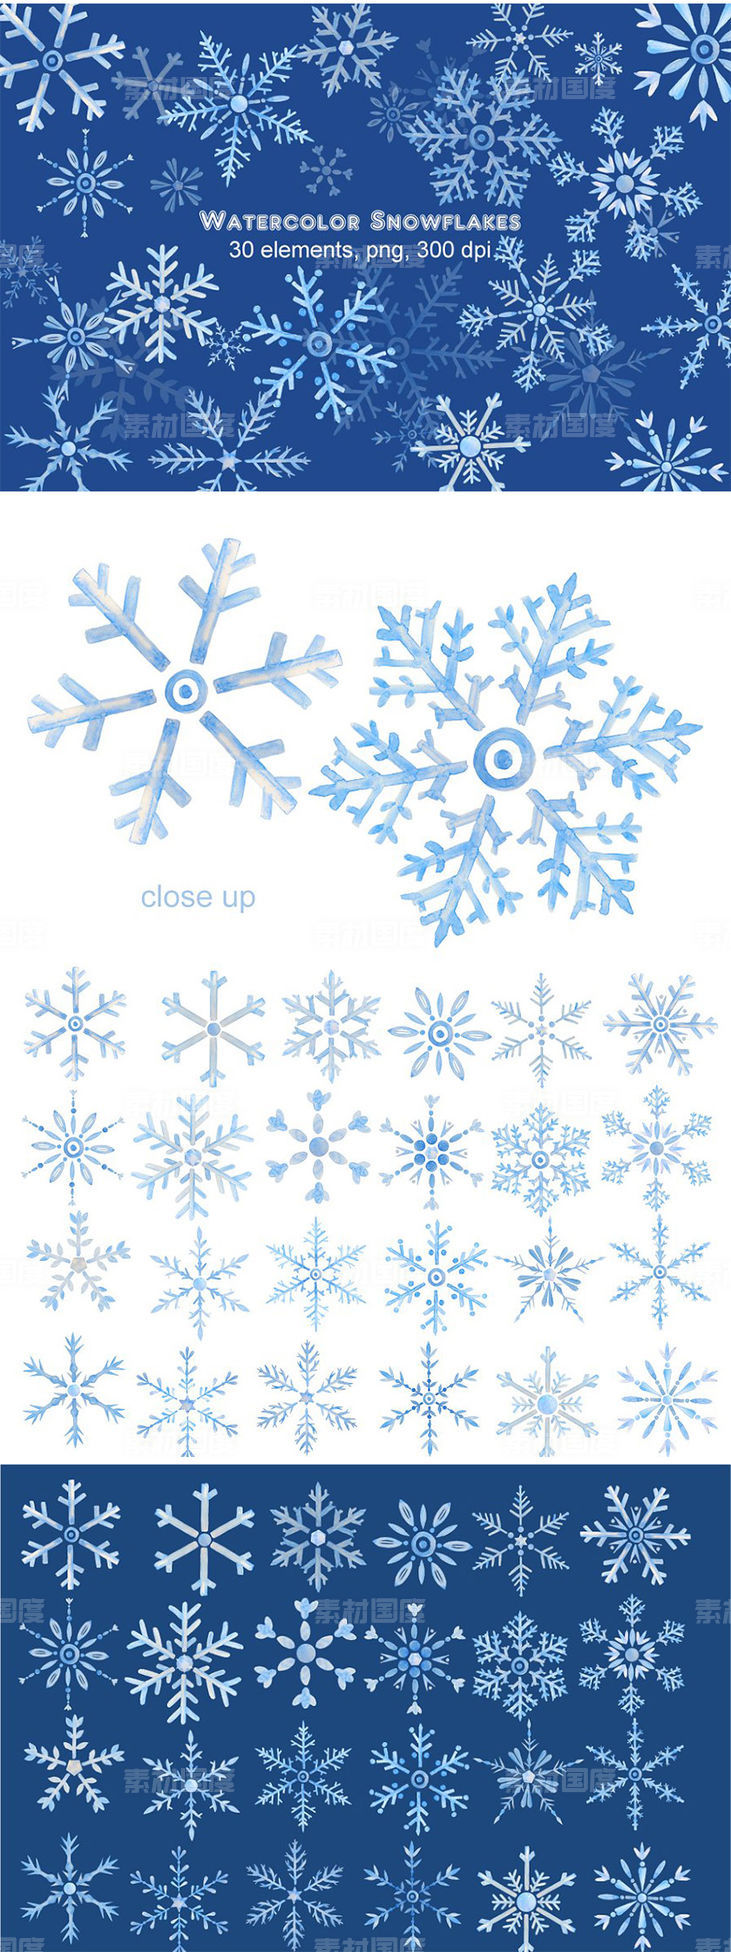 手绘水彩雪花剪贴画合集 Watercolor Snowflake Clipart